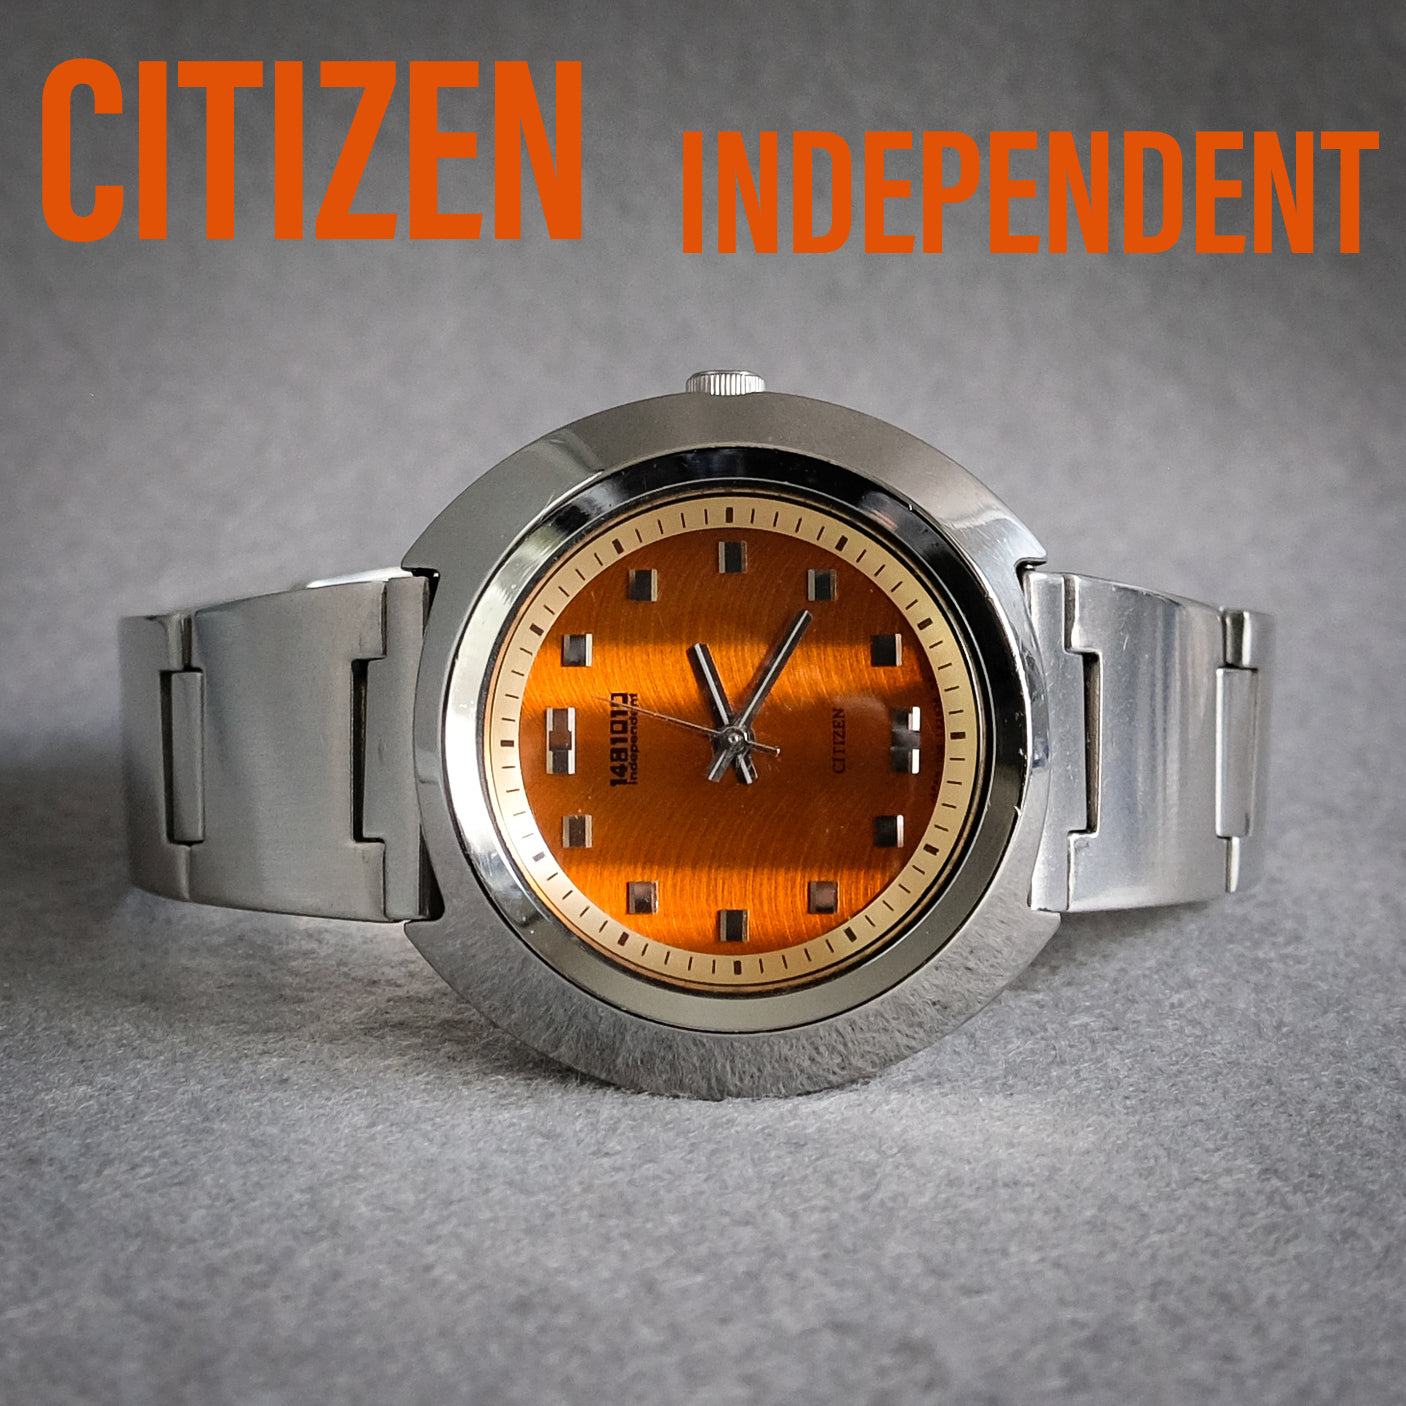 Citizen 1481010 INDEPENDENT